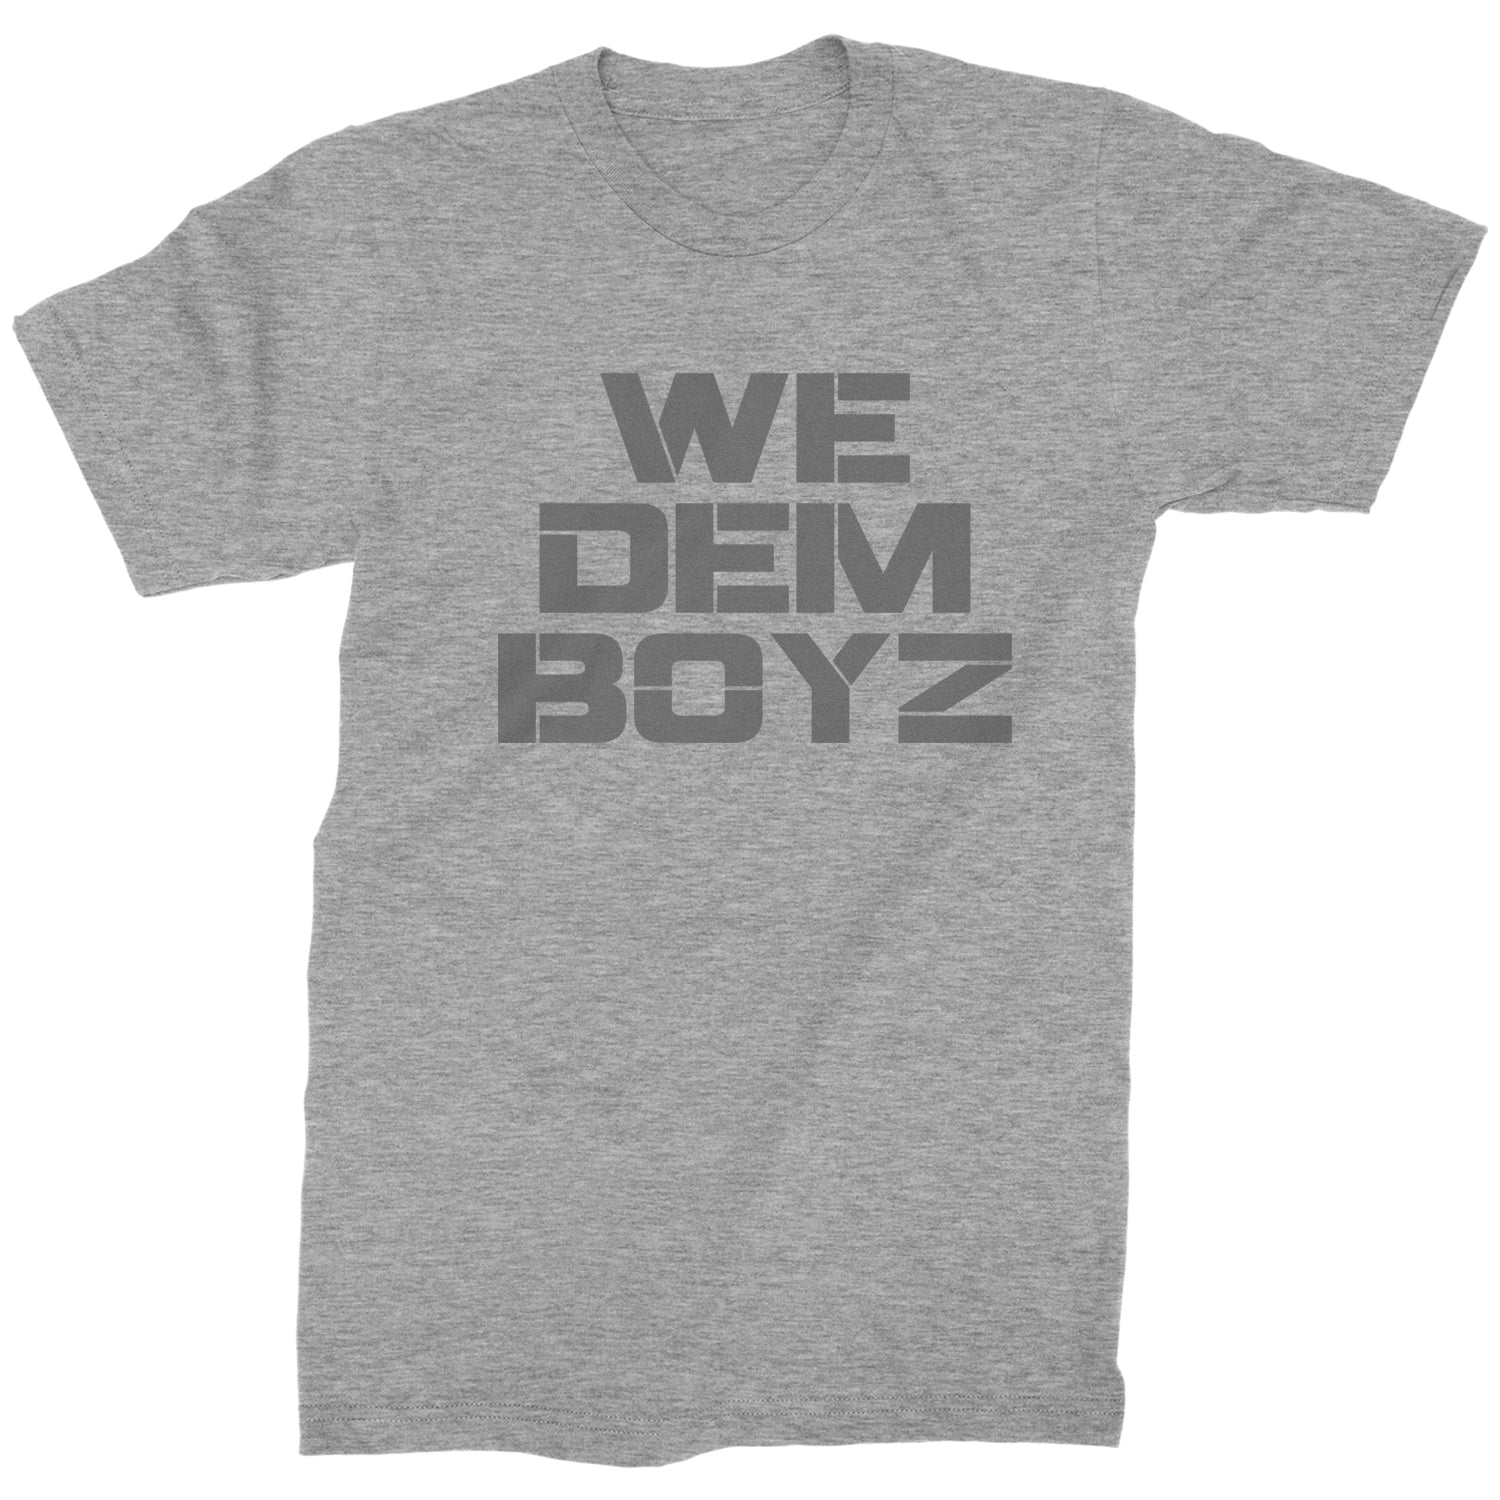 WE Dem Boys Dallas Mens T-shirt dak, dallas, dorsett, elliot, ezekiel, fan, feed, football, jersey, prescott, team, texas, tony, zeke by Expression Tees